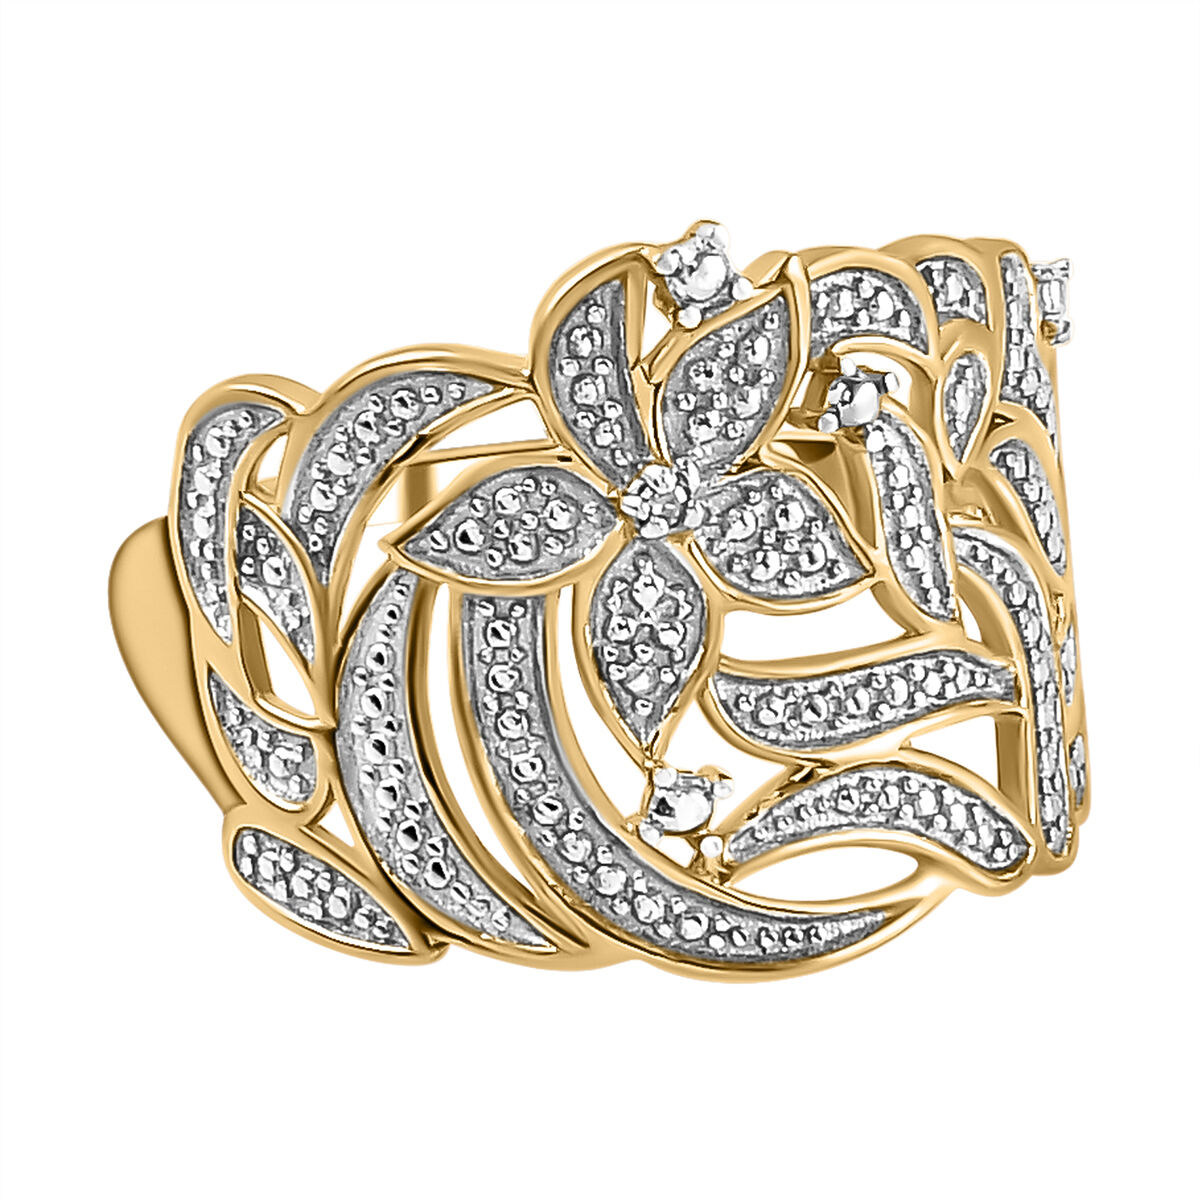 14k Gold Overlay Sterling Silver Filigree Design Ring New Old Stock 